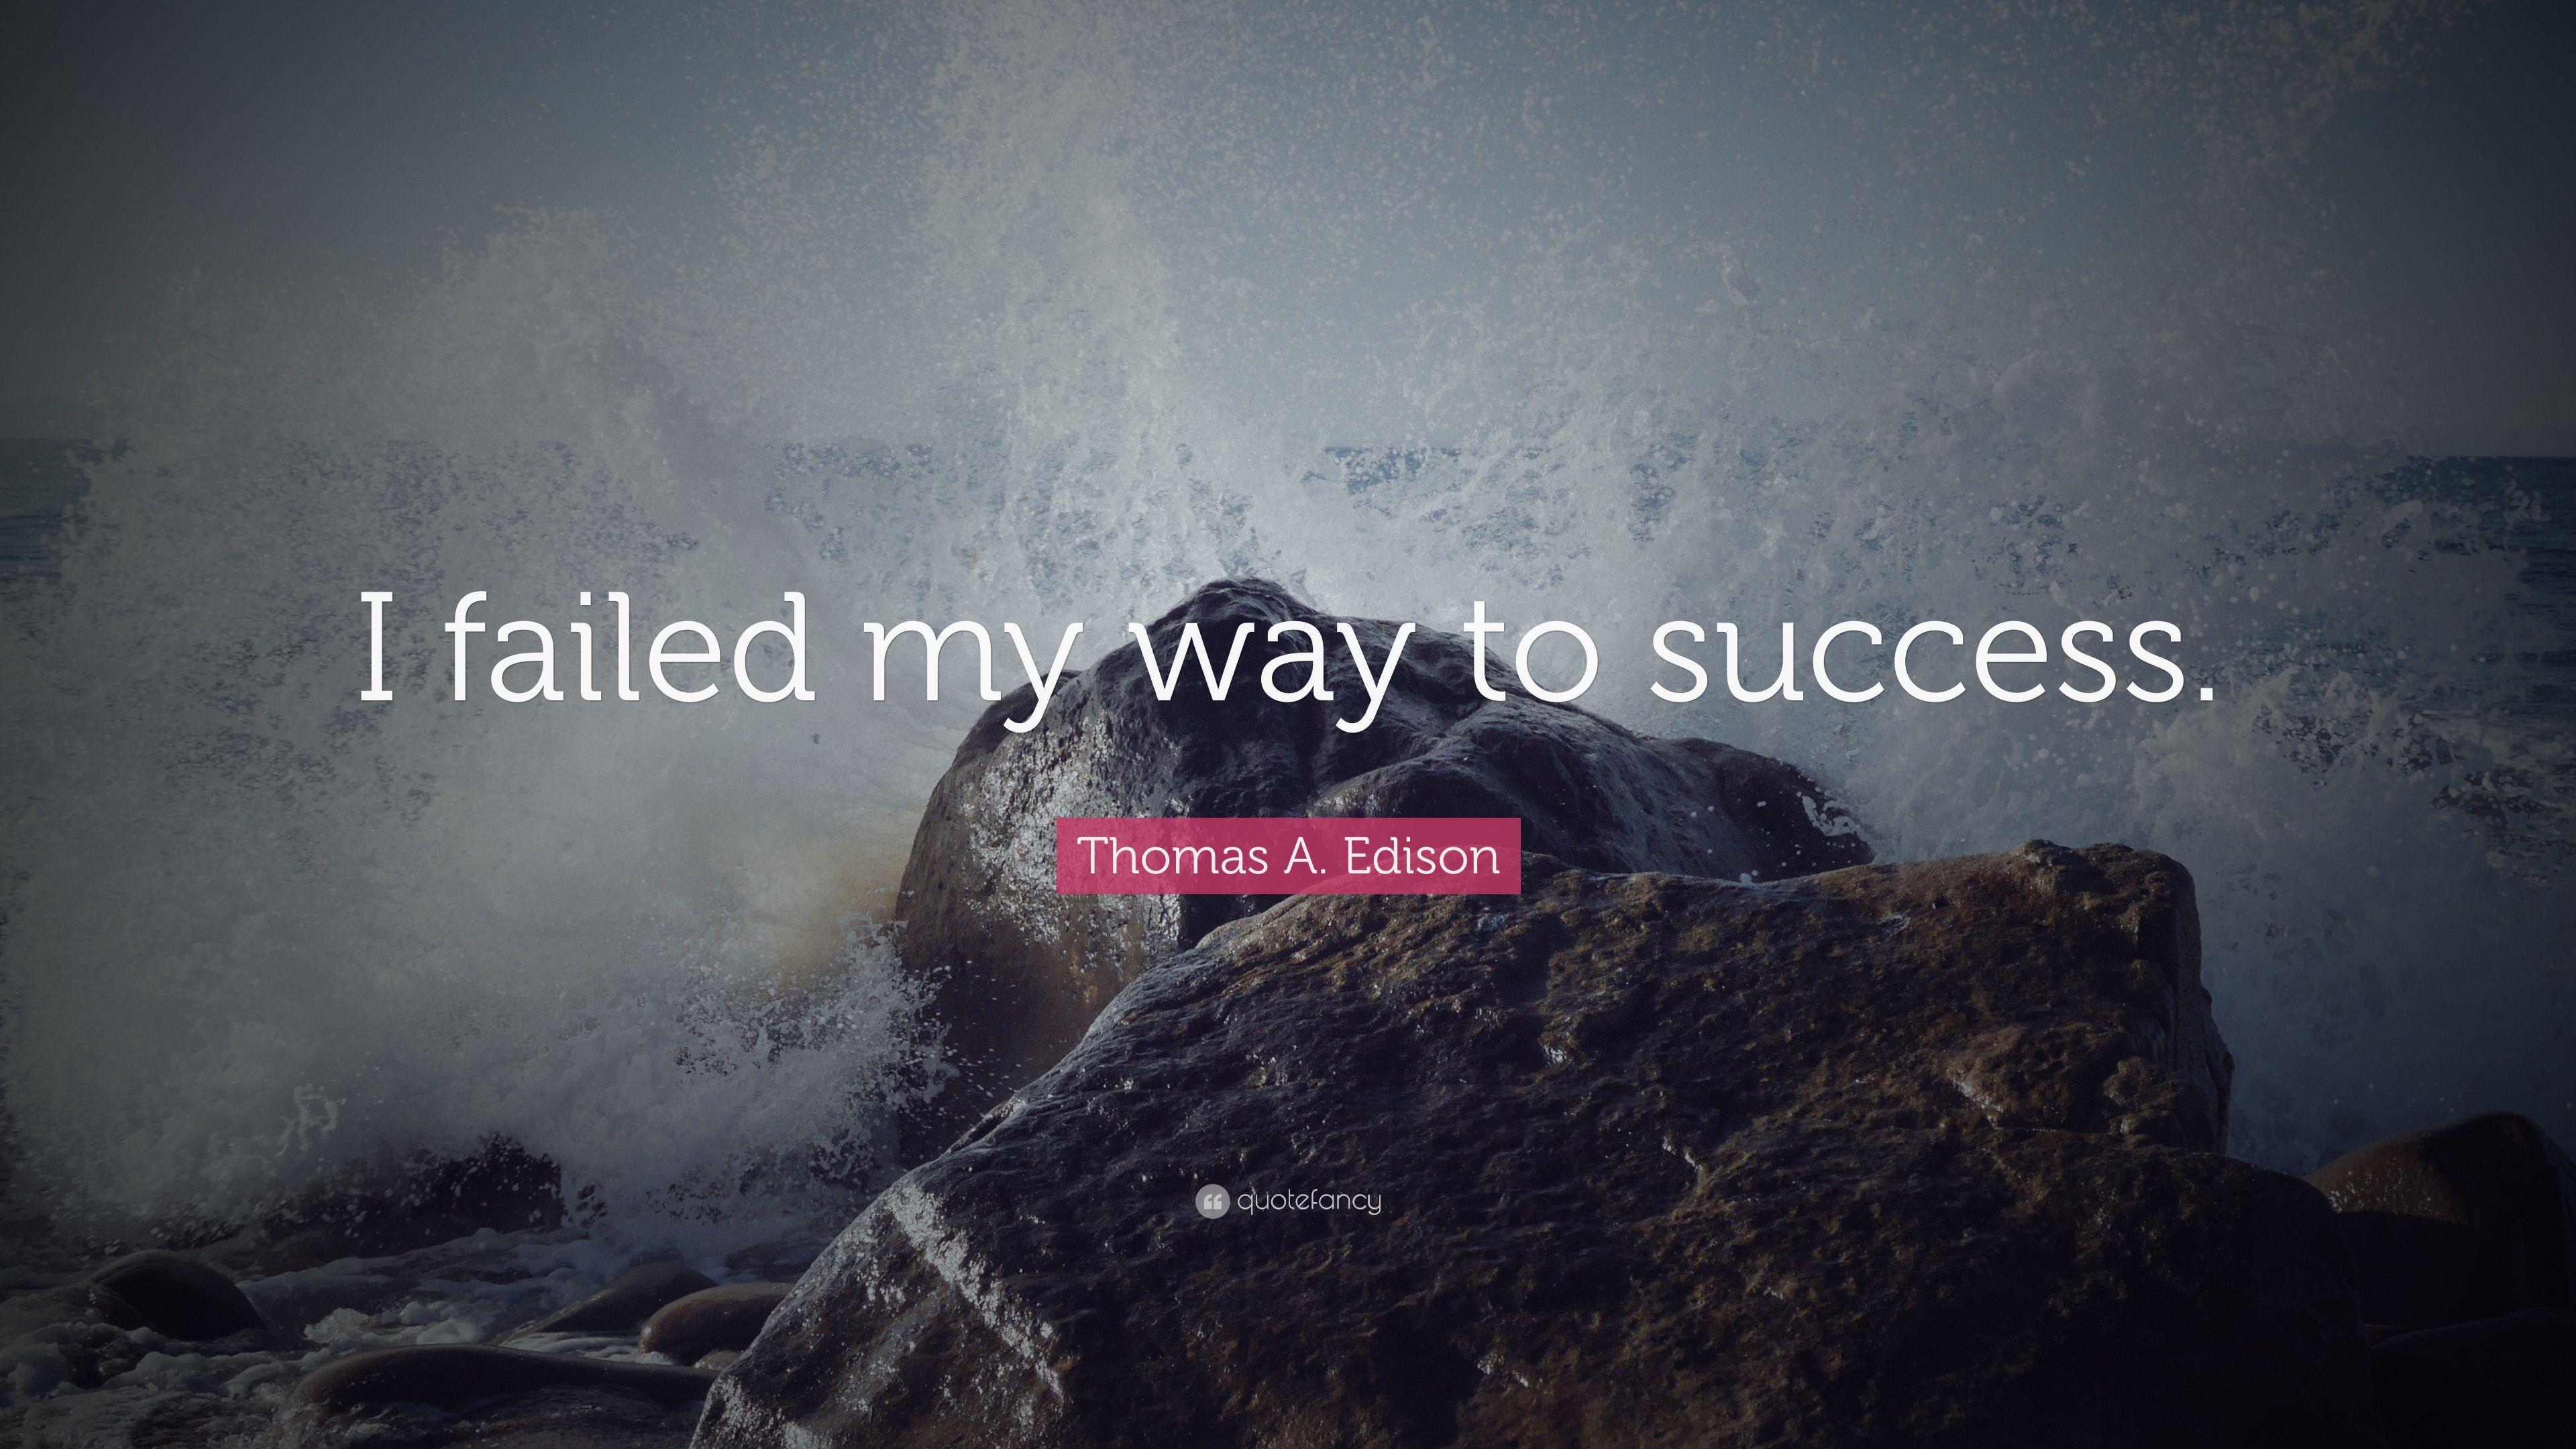 Thomas A. Edison Quote: “I failed my way to success.” 12